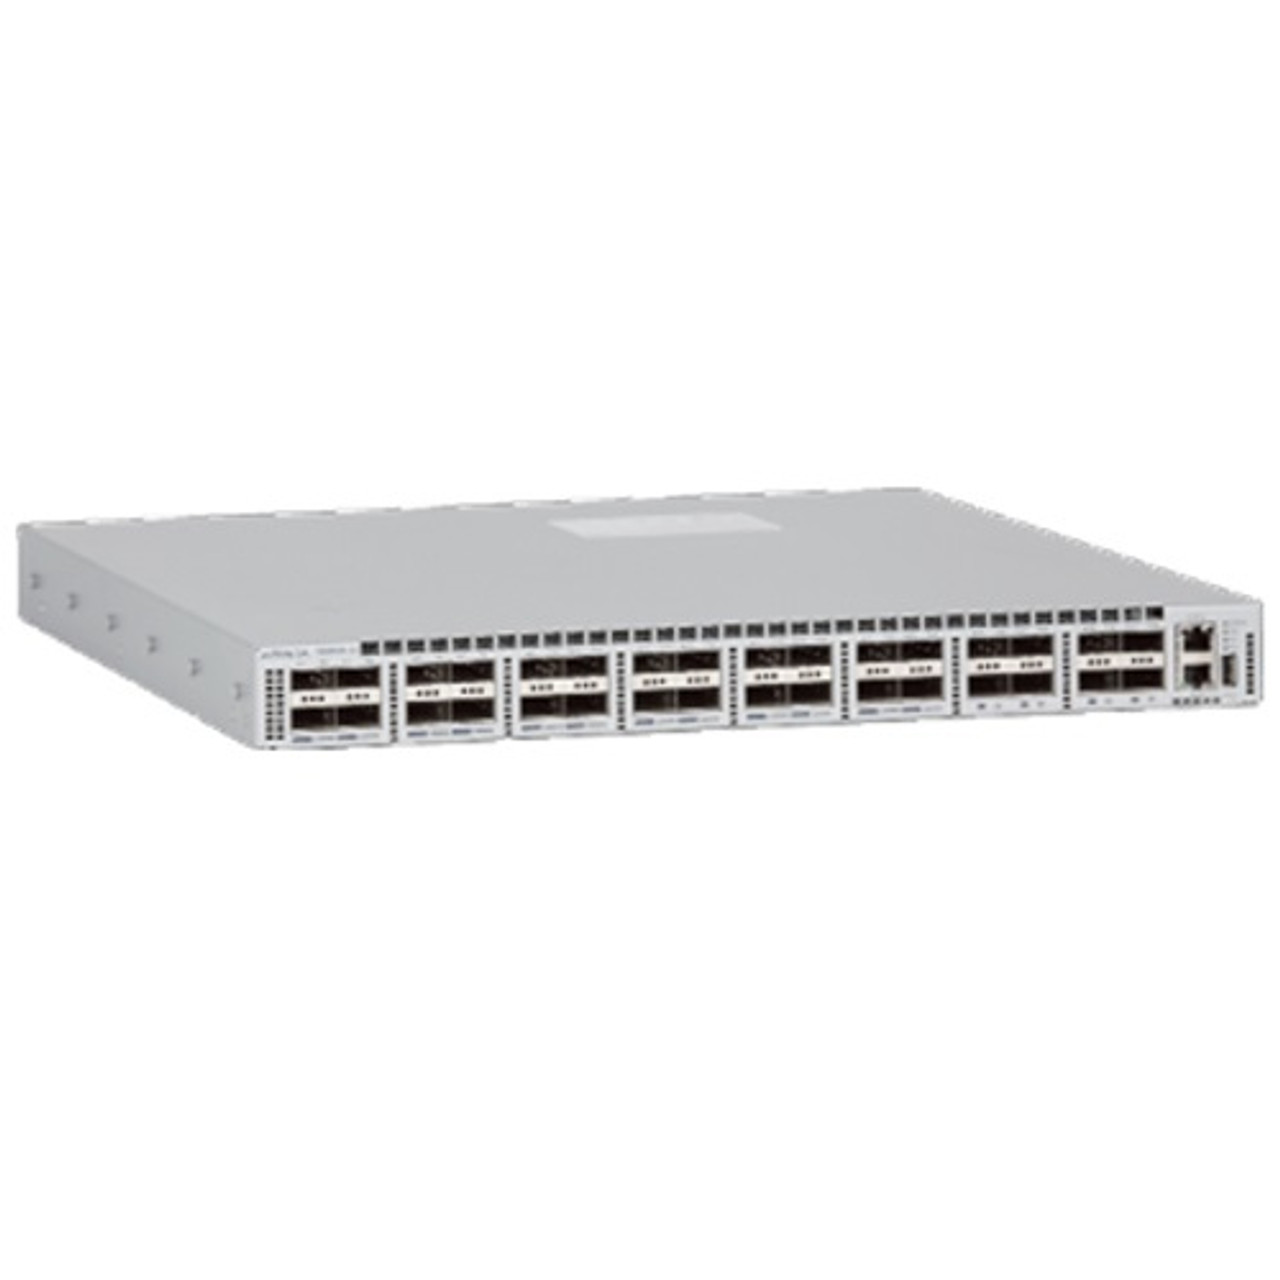 Arista DCS-7050QX-32 QSFP+ 40Gbps Network Switch 32 Port